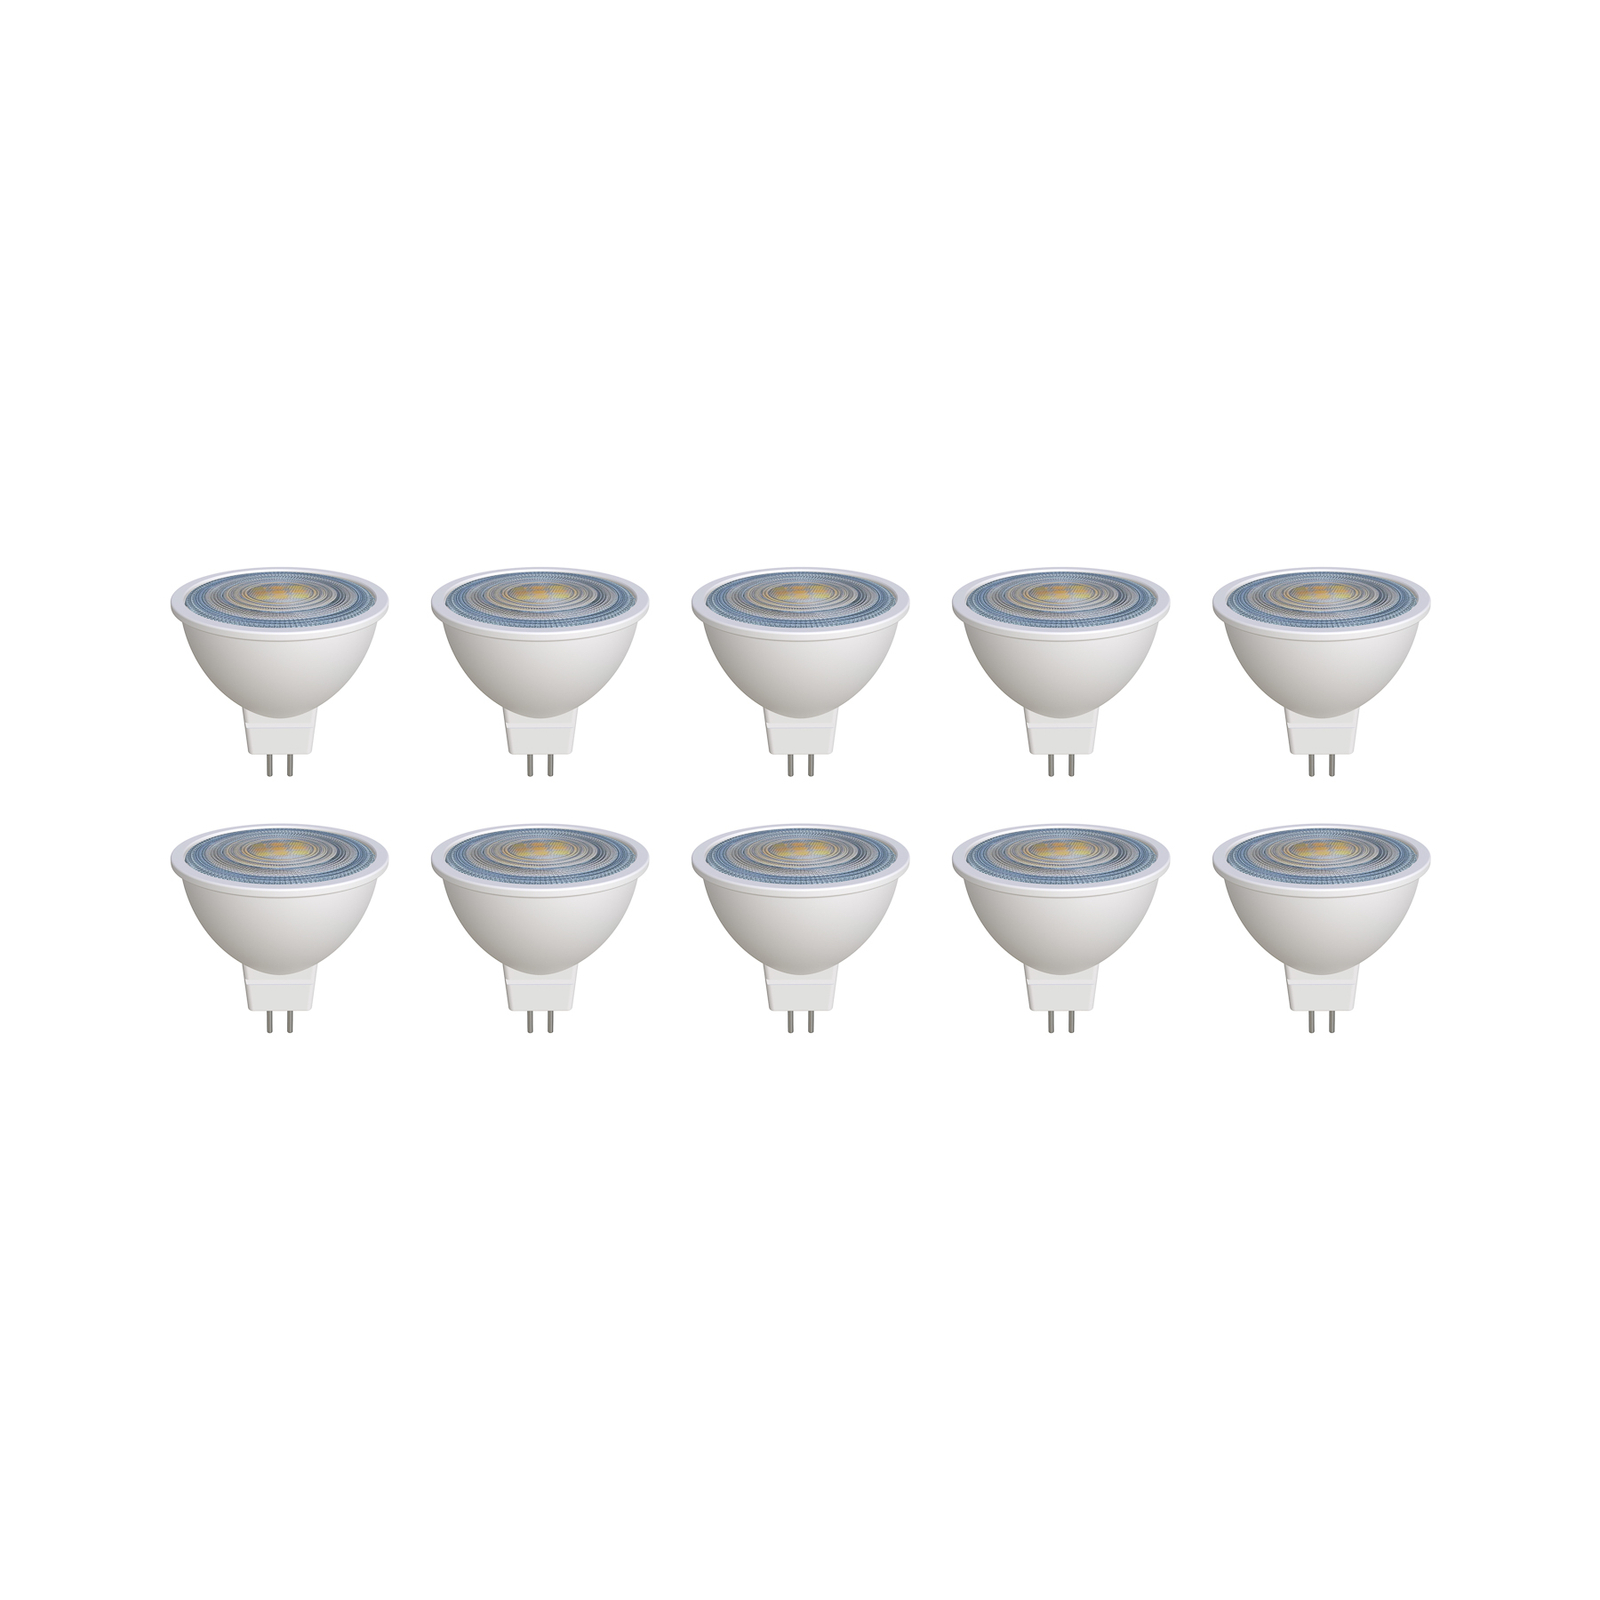 Prios GU5.3 LED bulb 7.5W 621lm 36° white 827 set of 10